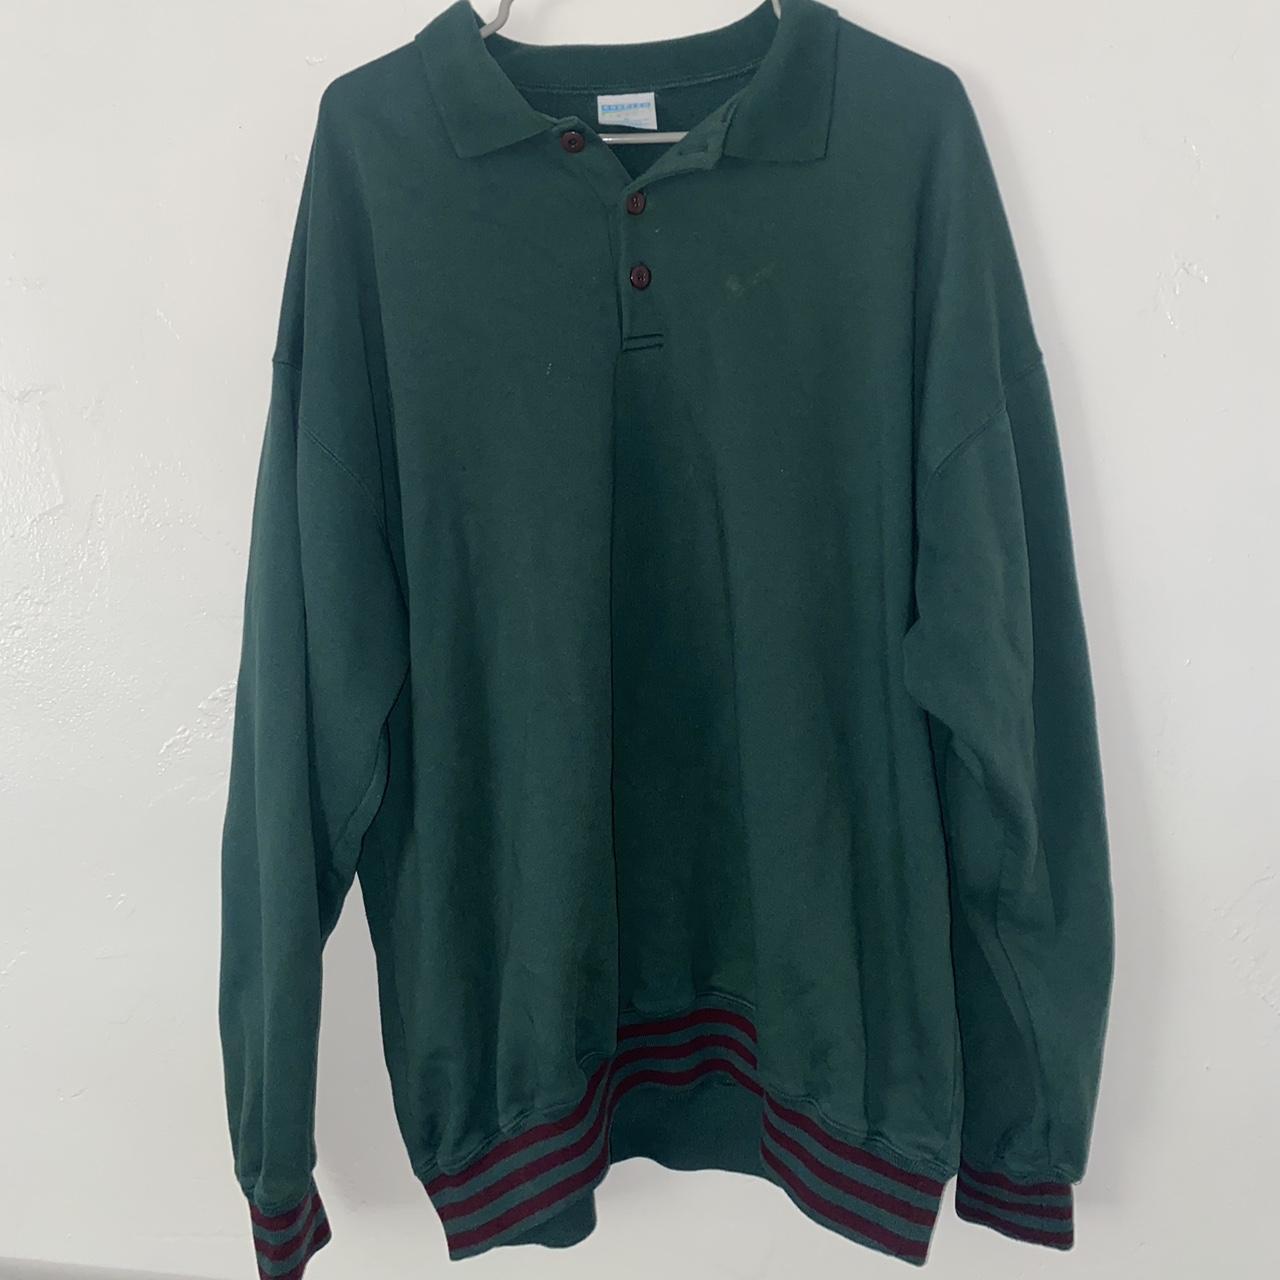 Green collared sweater - Depop